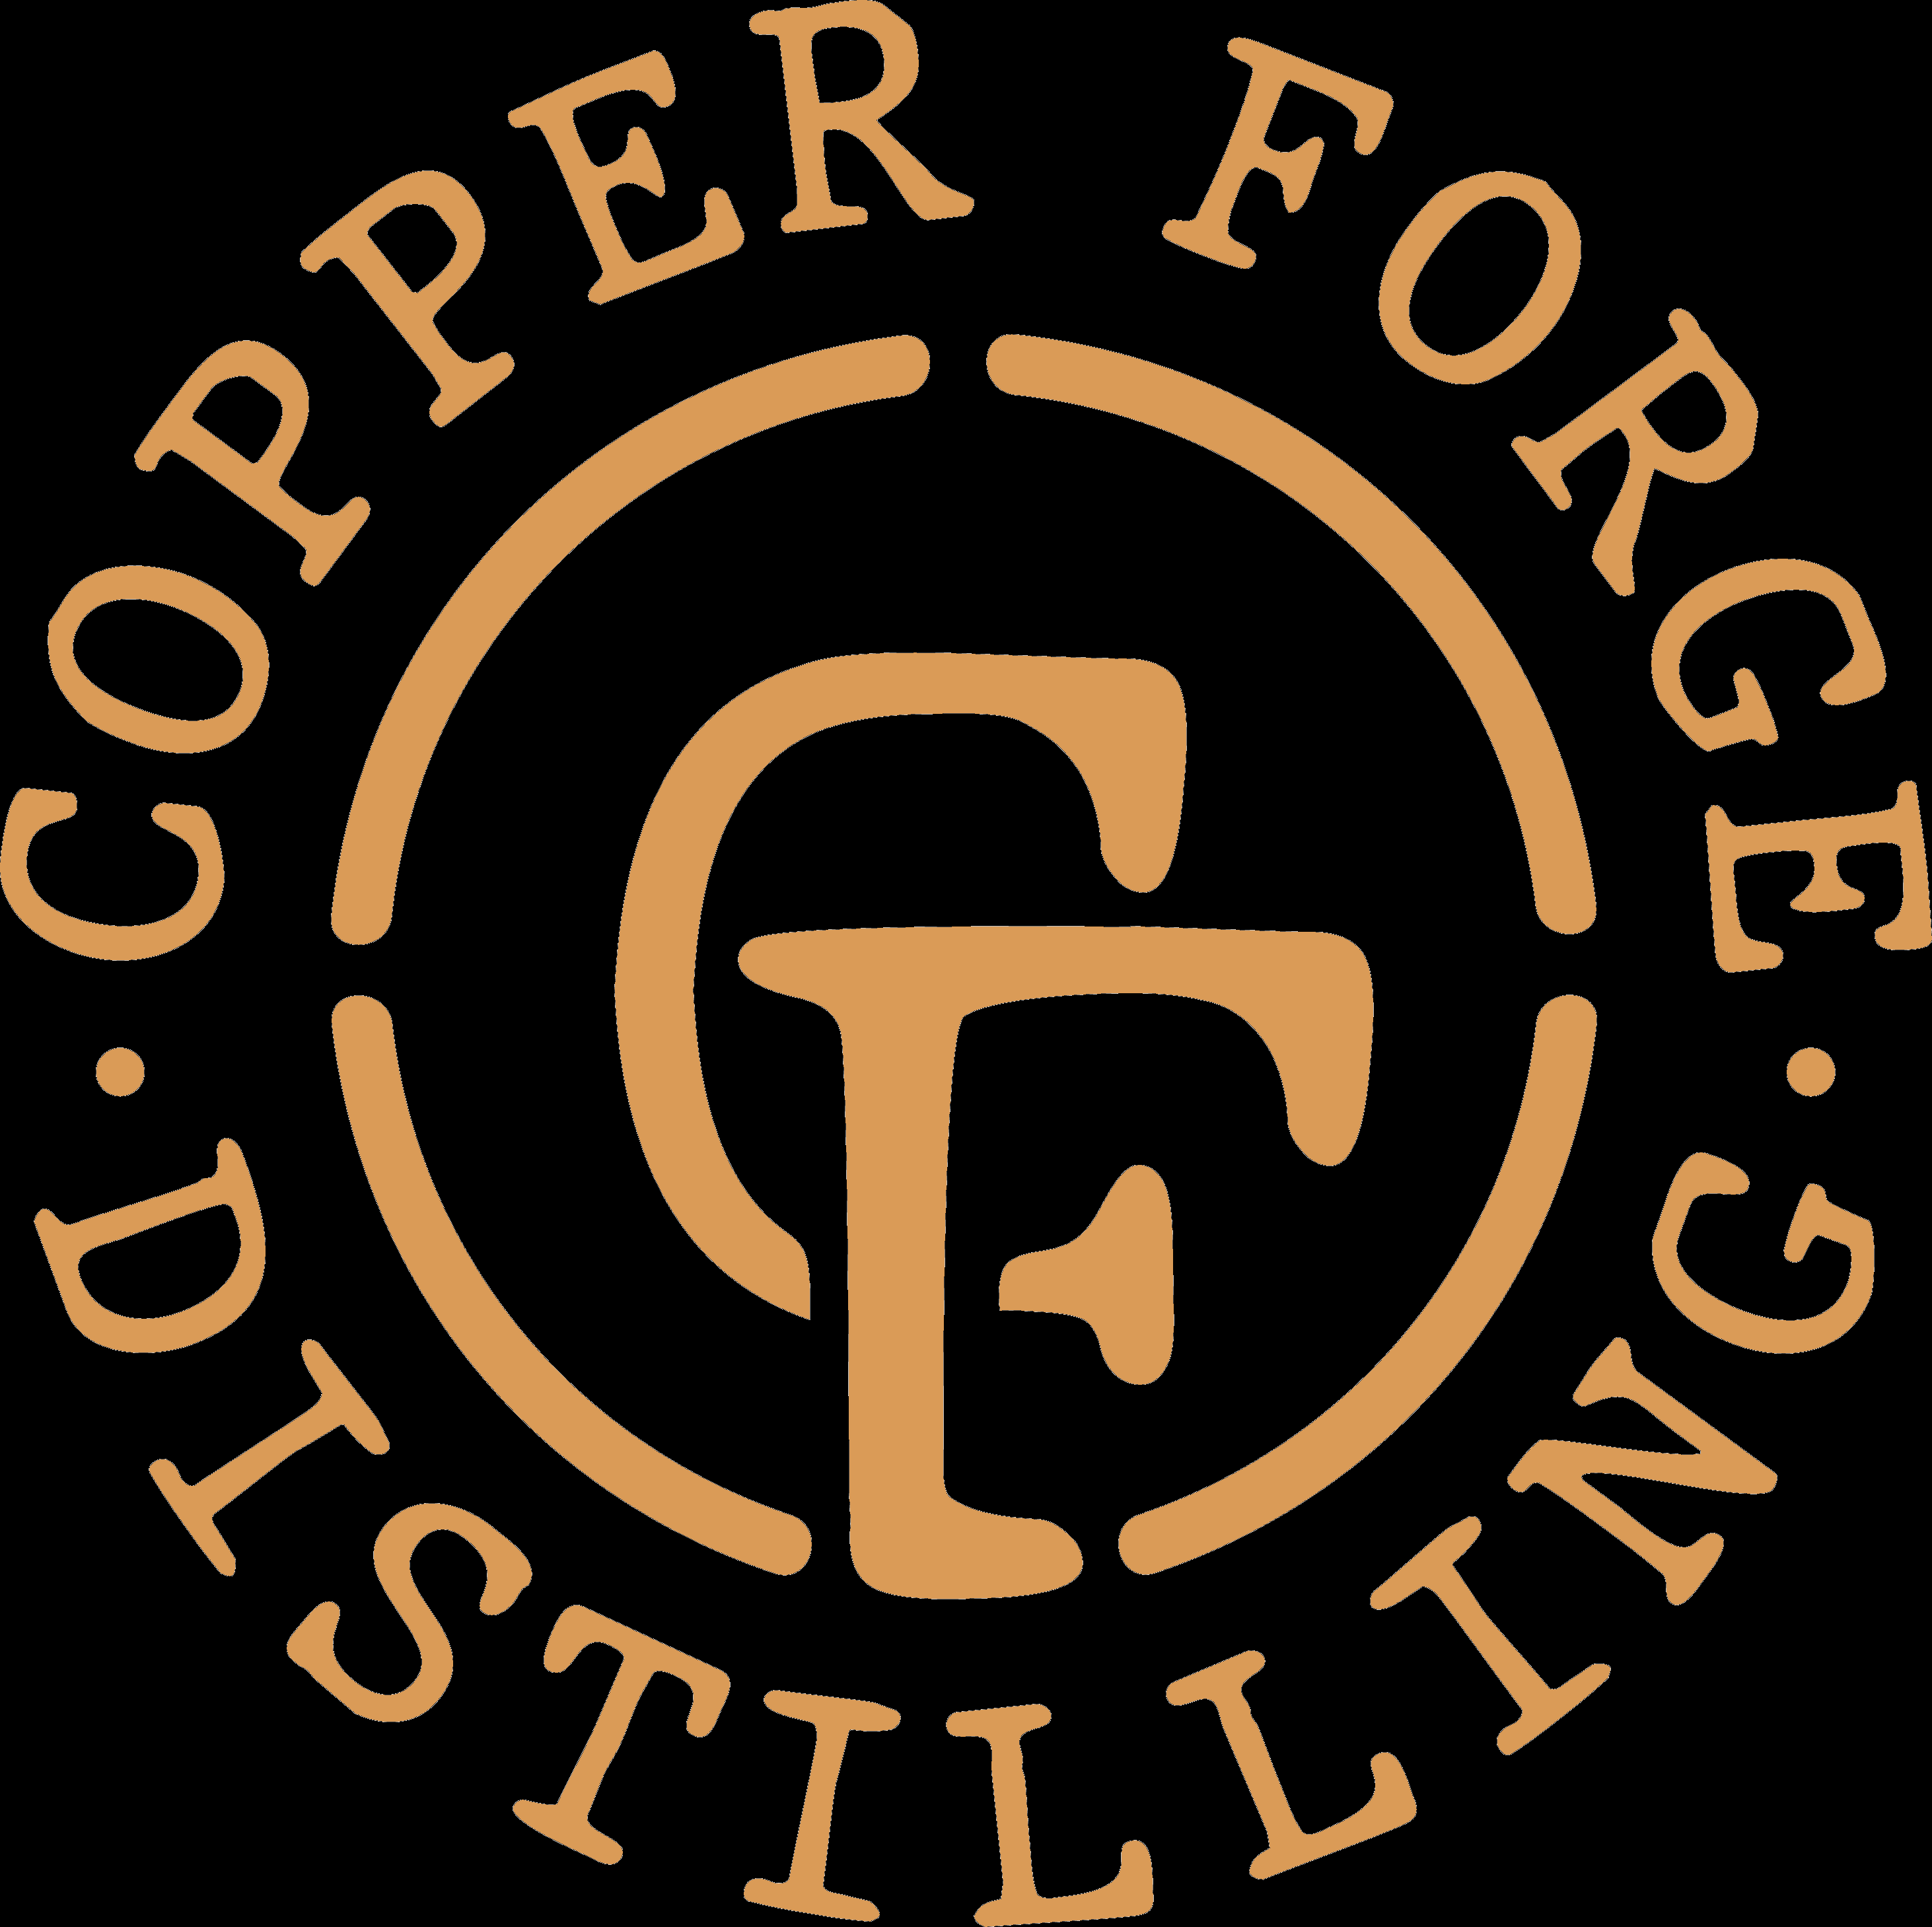 Copper Forge Distilling